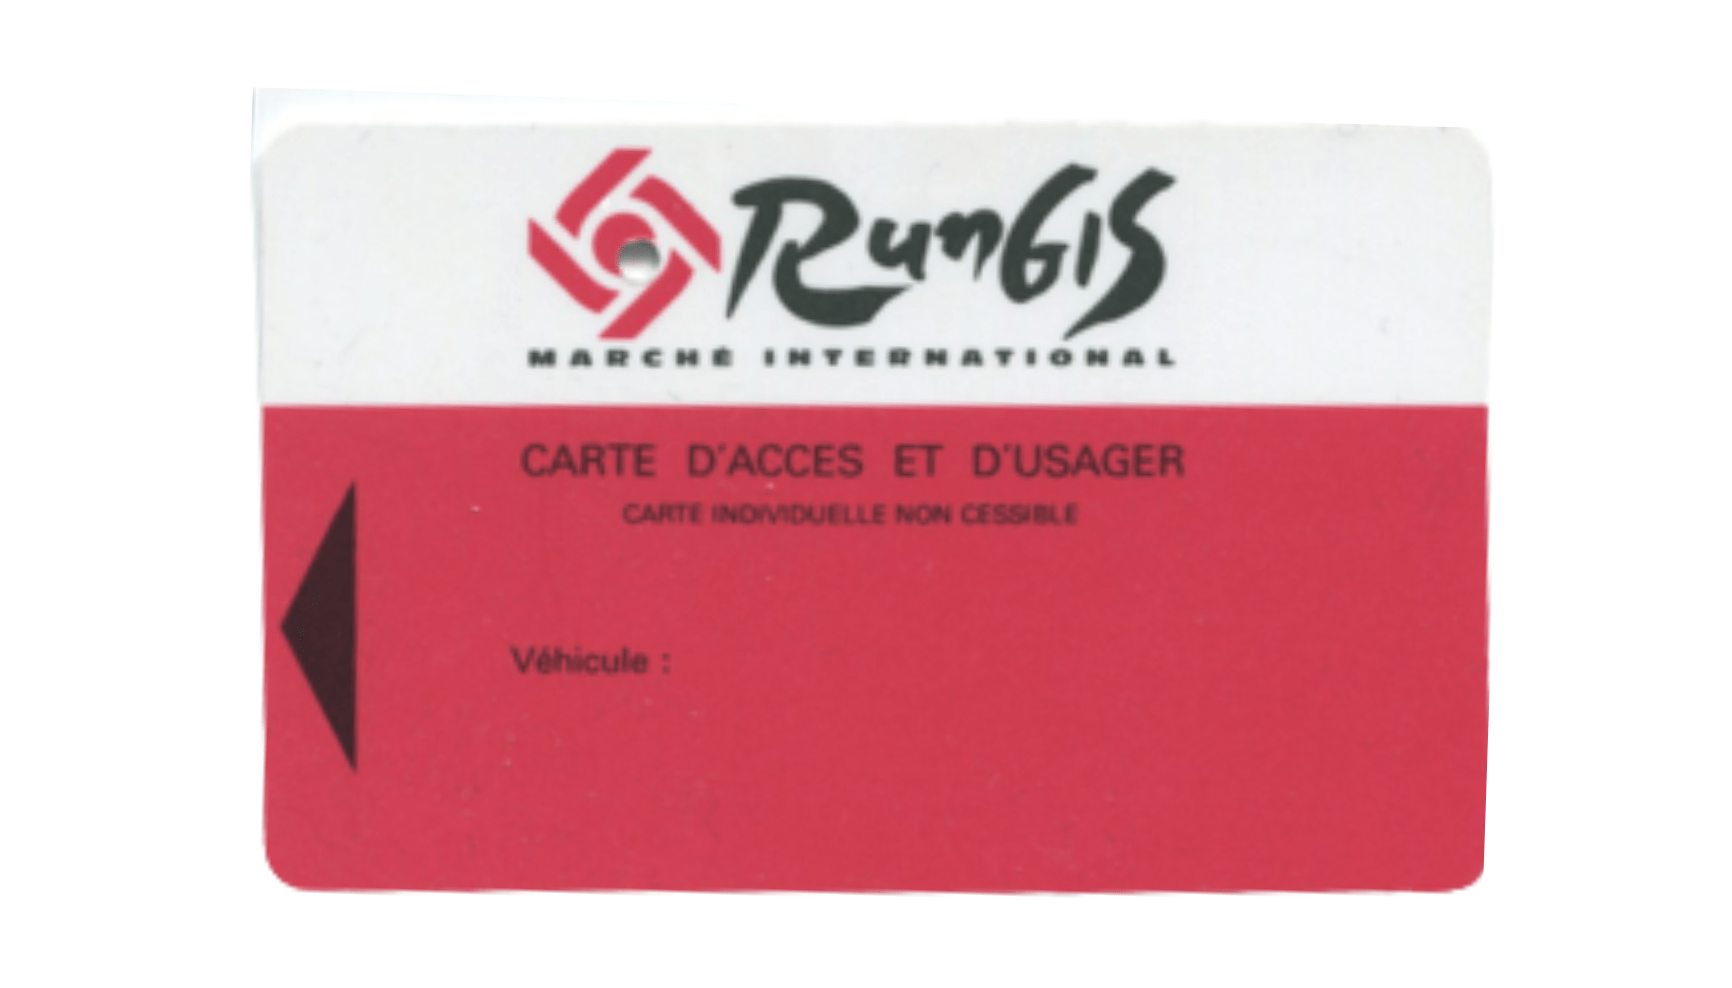 Rungis card